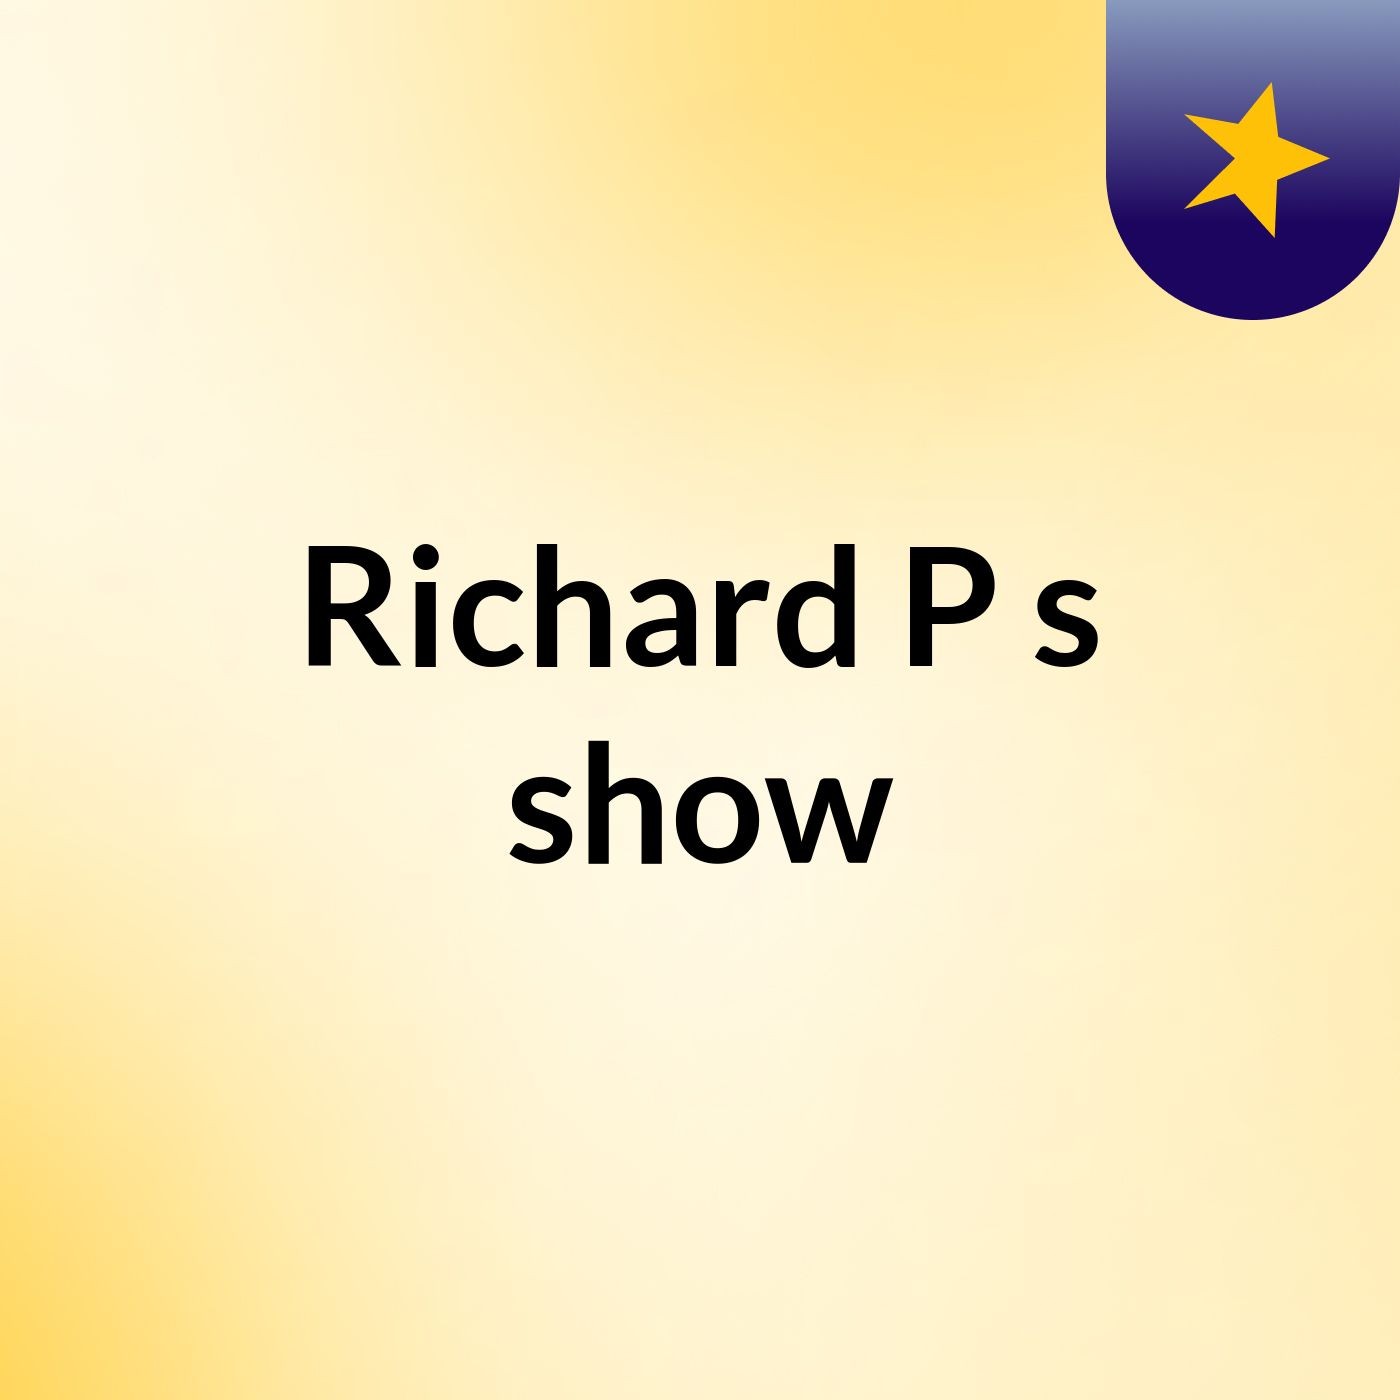 Richard P's show